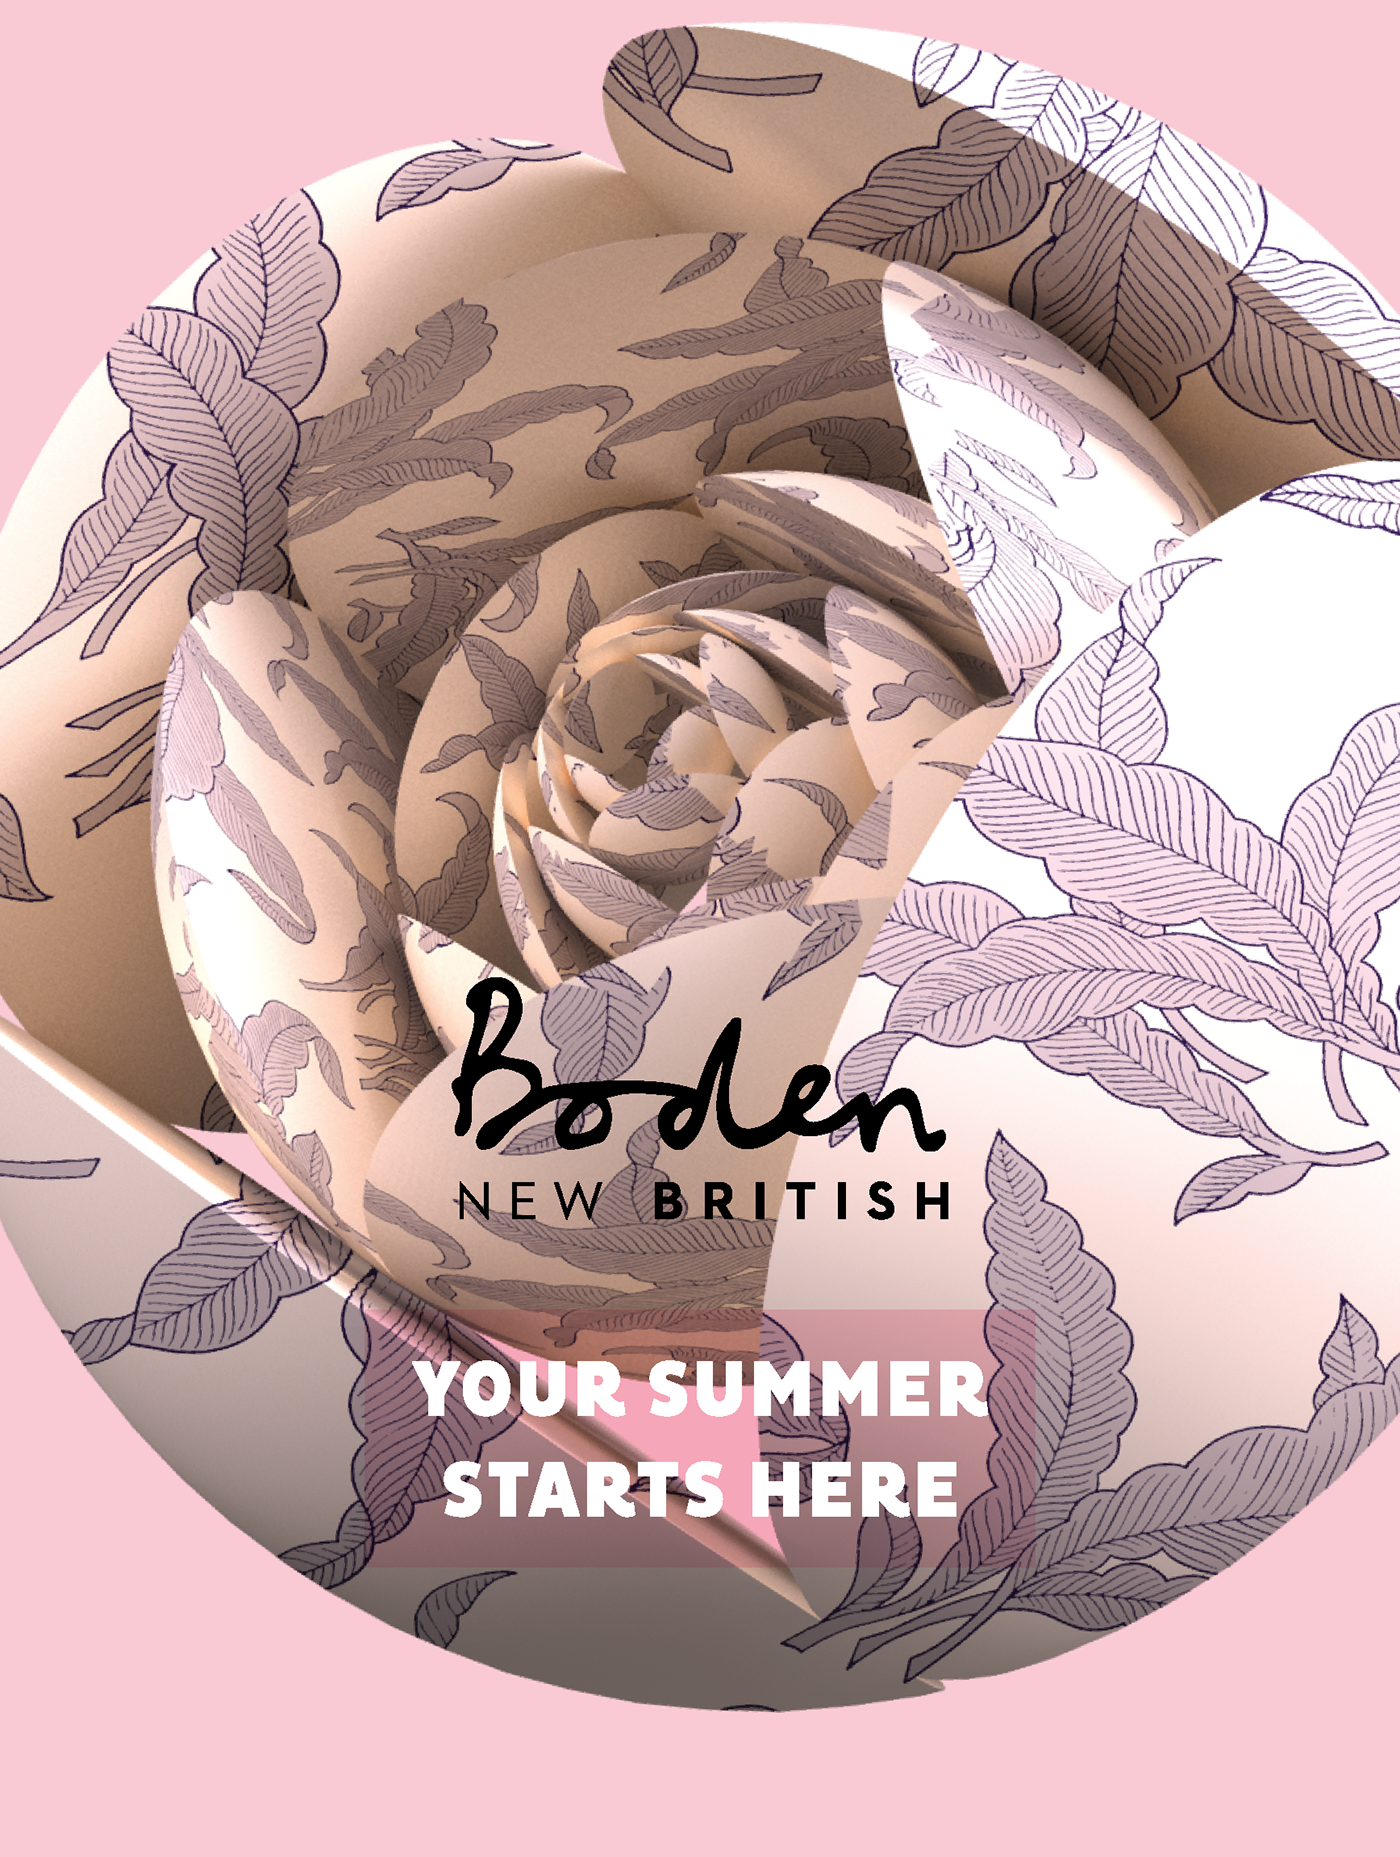 Boden english Catalogue Fall 2016 fashion fashioneditoral summer new england modern digital cover print pastel summer fashion women fashion